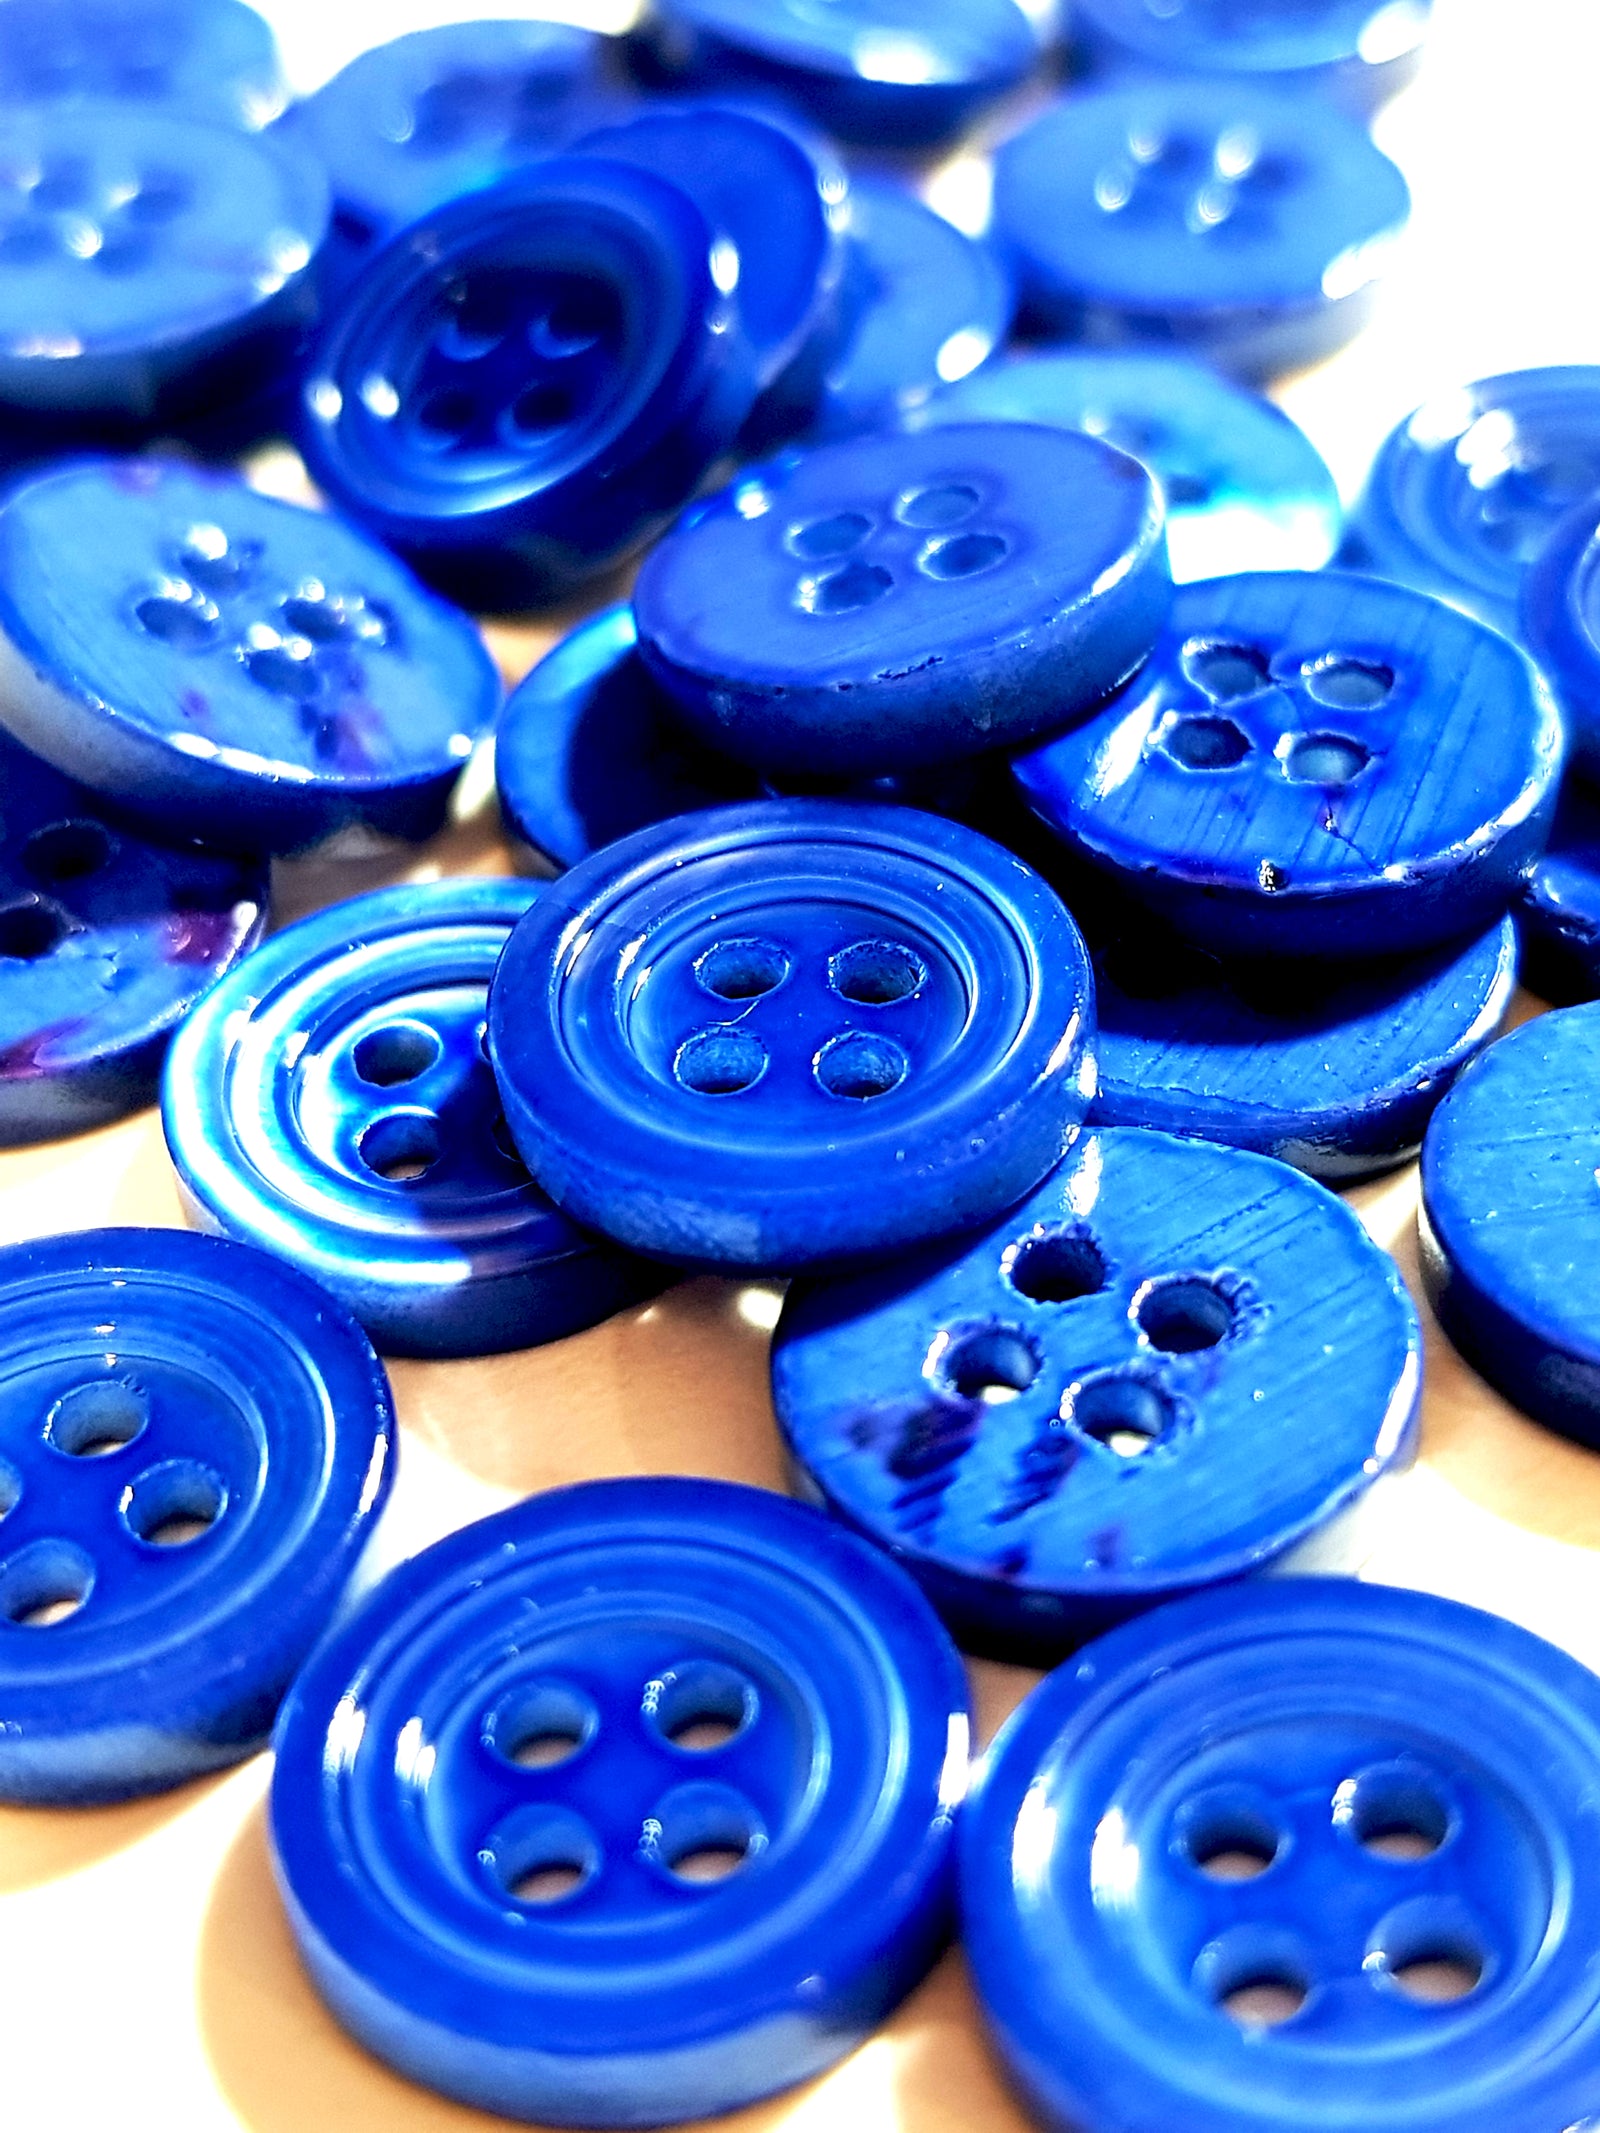 SP02/Bl HUBERROSS Blue Colored Trocus Shell Buttons